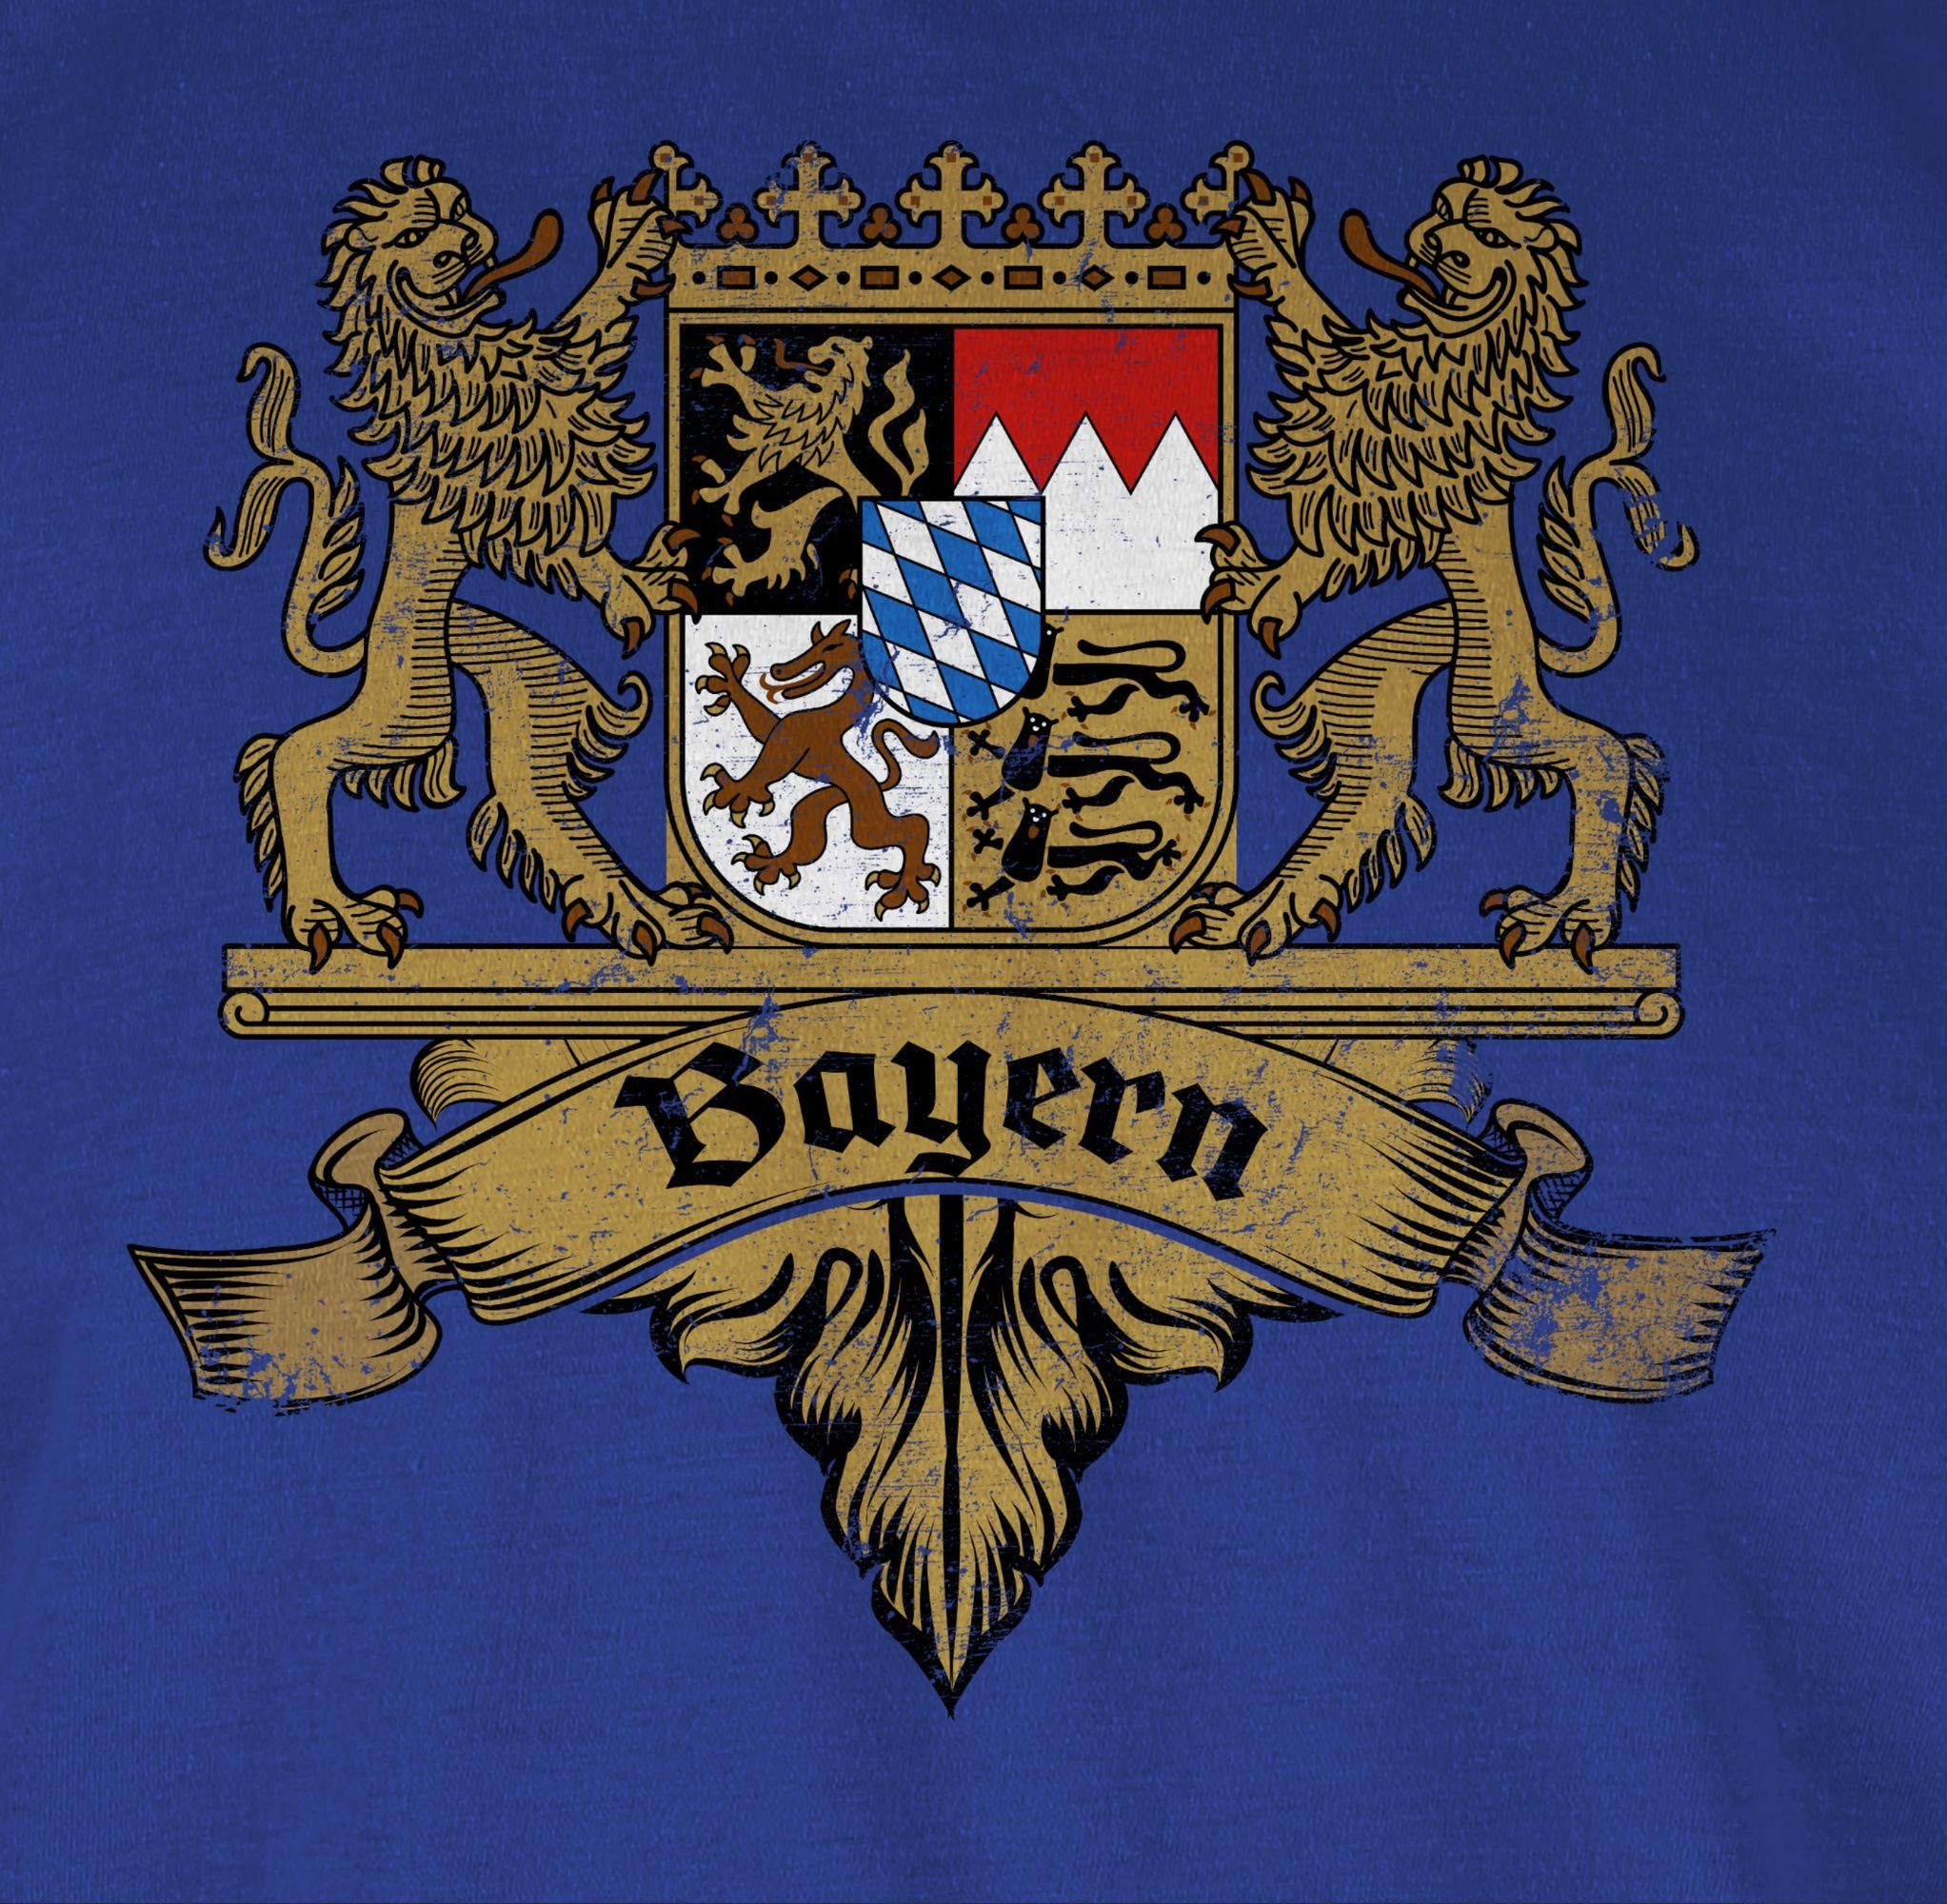 Royalblau Oktoberfest Shirtracer Mode T-Shirt für Herren Bayernland Freistaat Wappen Bayern 02 Bayern